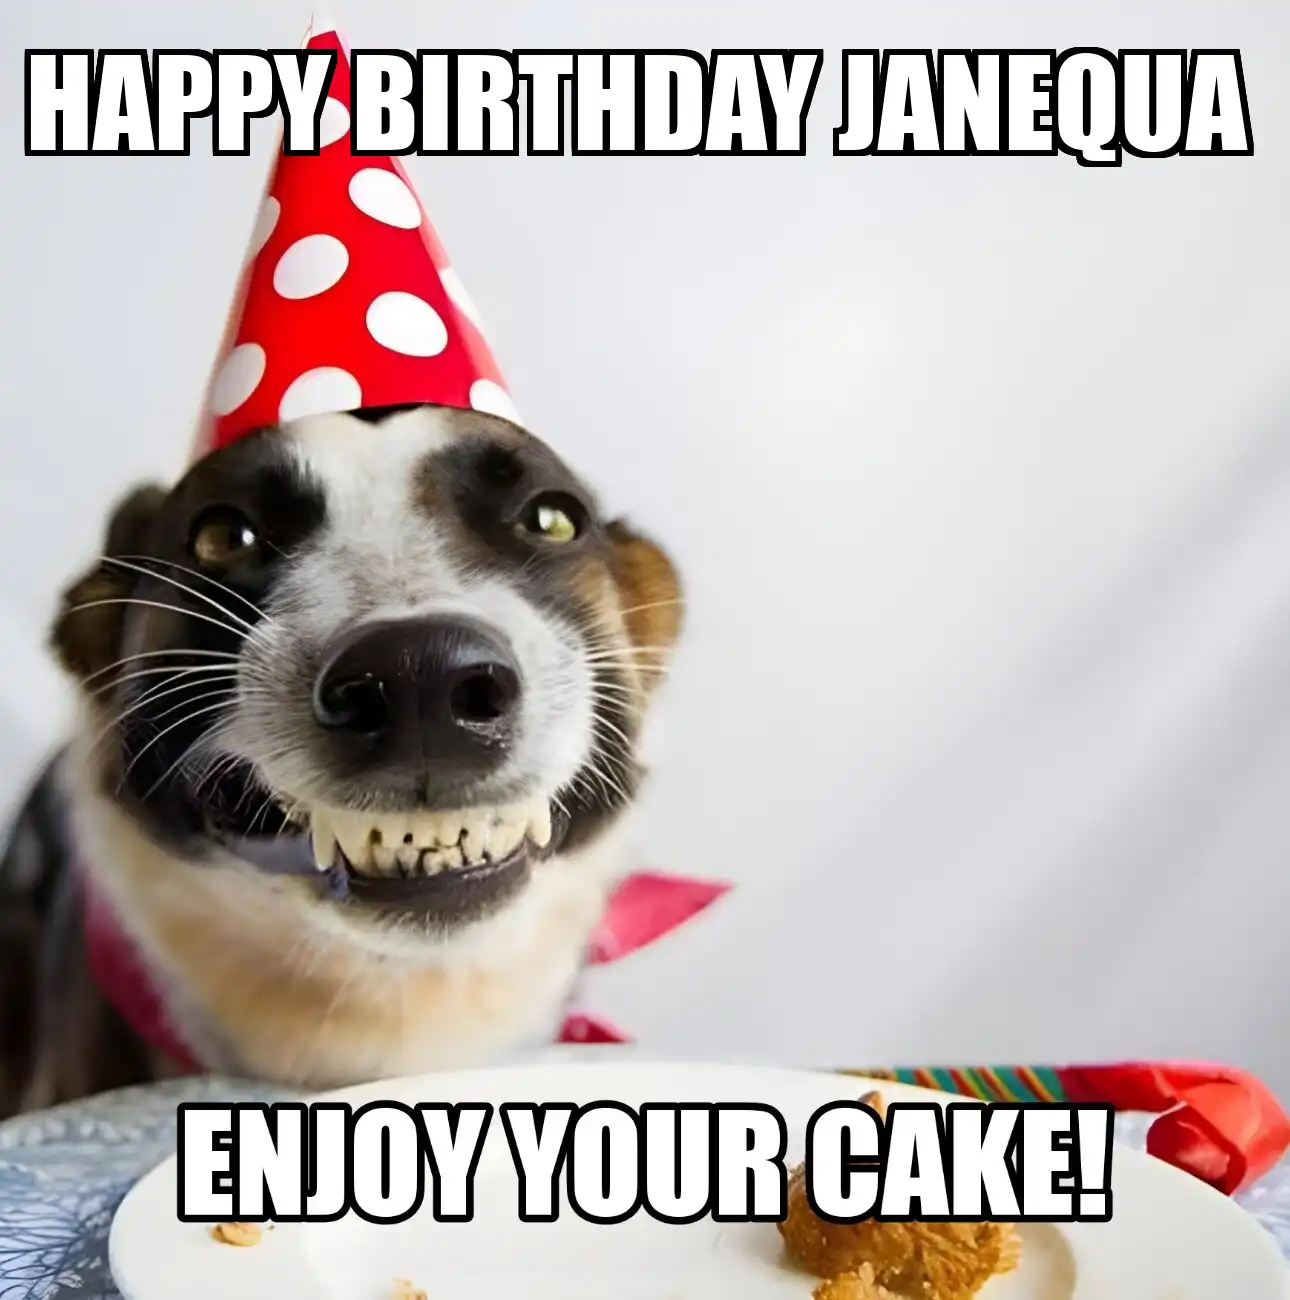 Happy Birthday Janequa Enjoy Your Cake Dog Meme